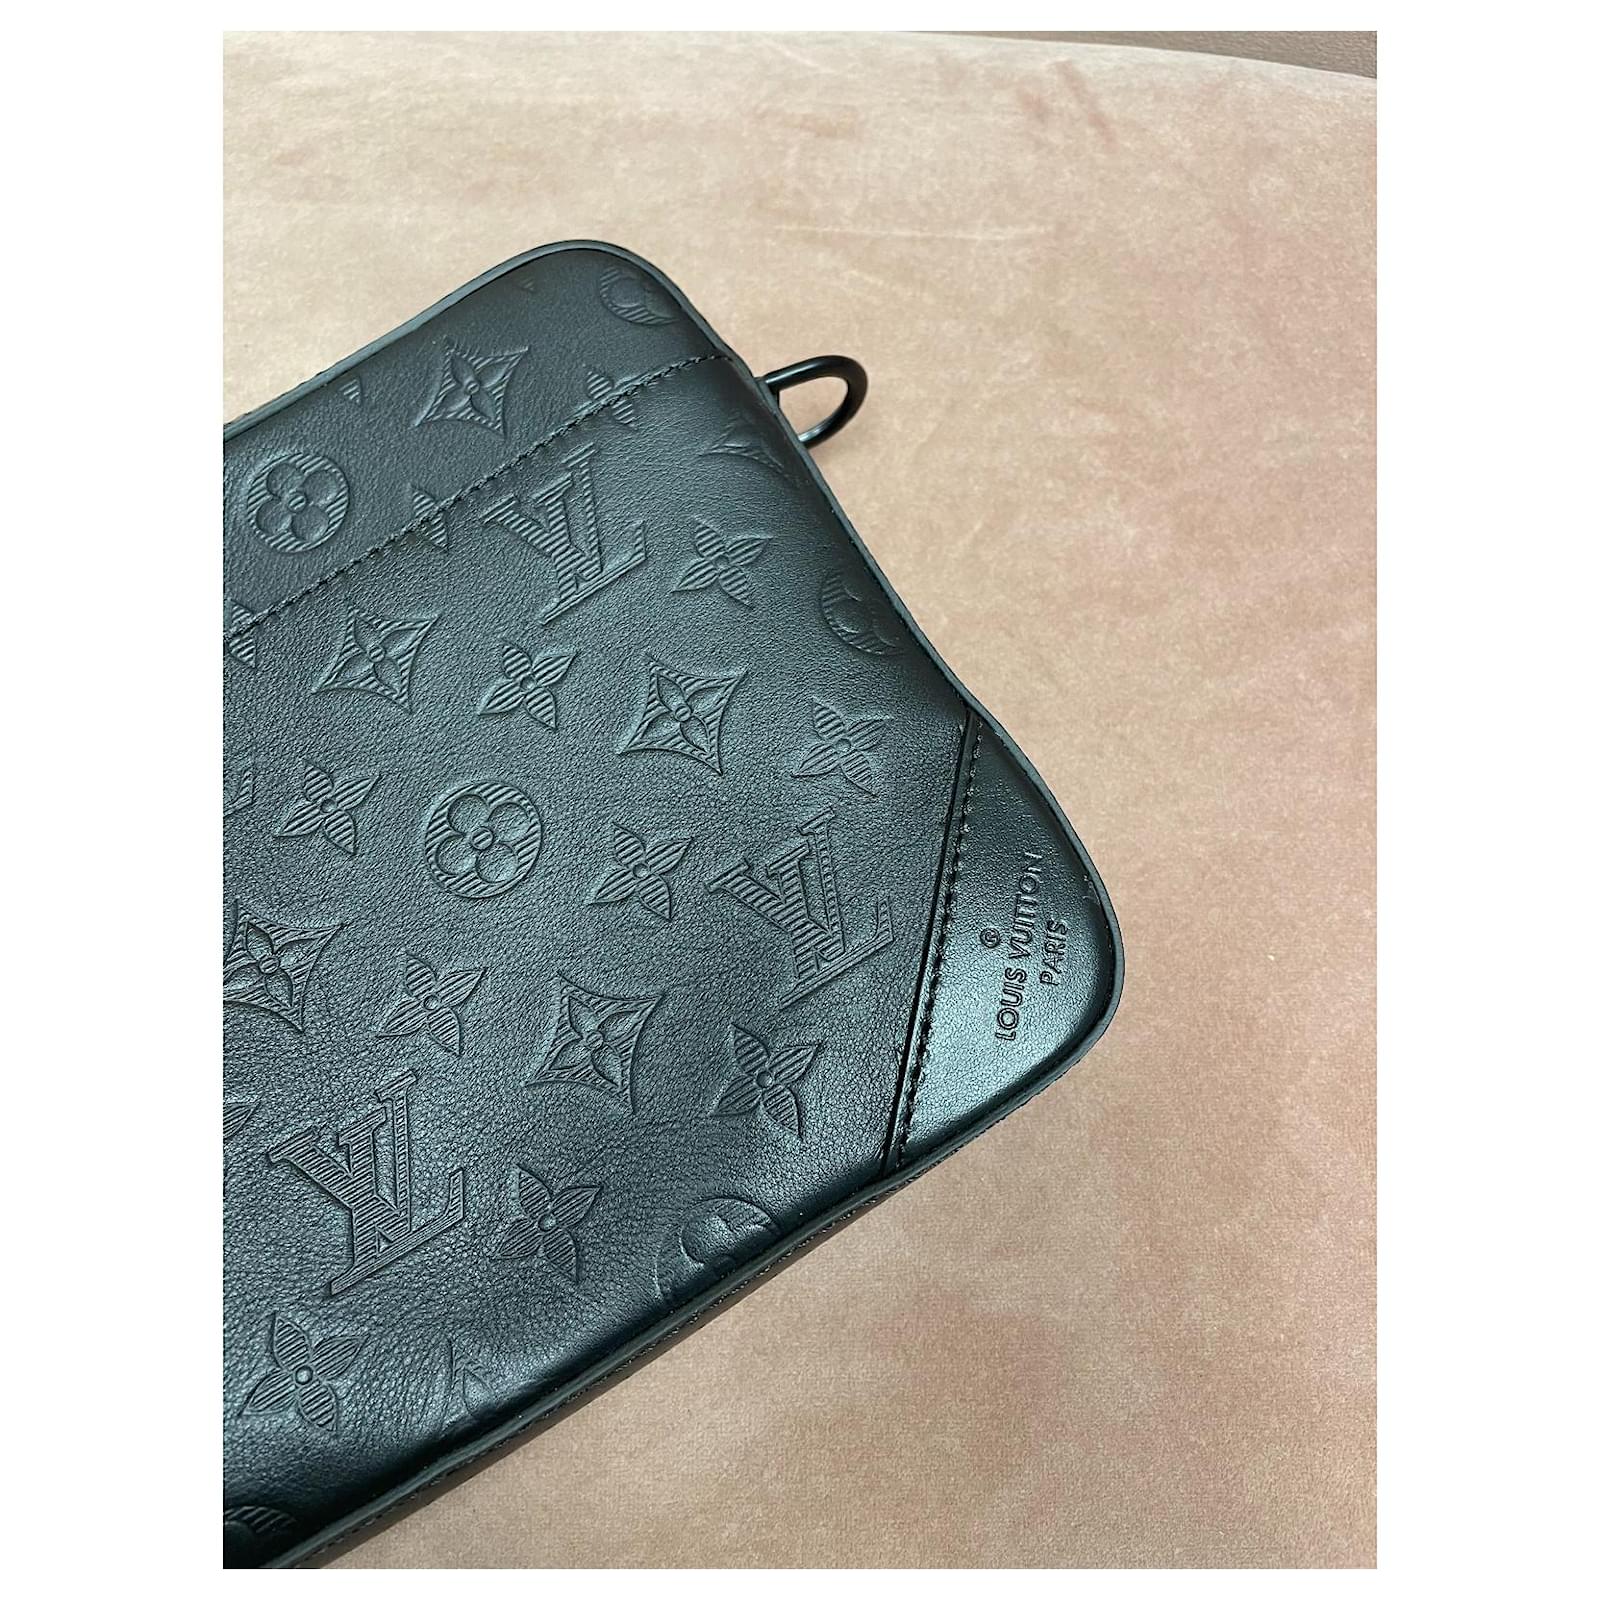 Louis Vuitton Duo Messenger Bag Black - THE PURSE AFFAIR